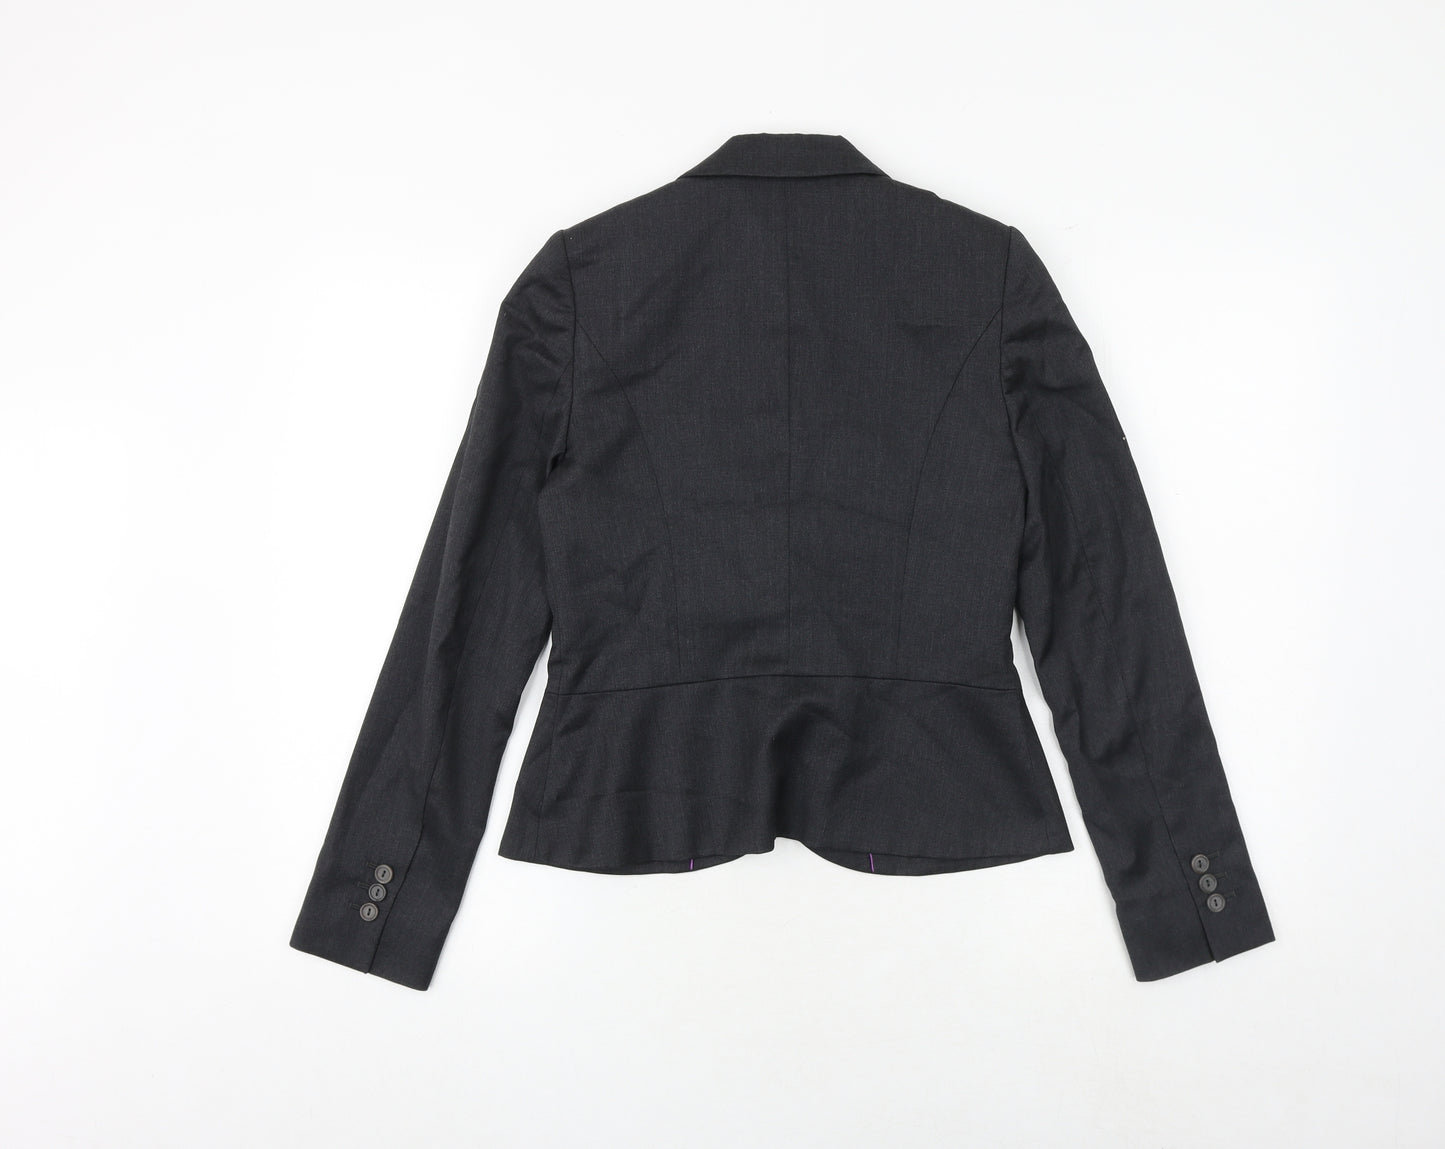 Joesph Womens Grey Wool Jacket Suit Jacket Size 8